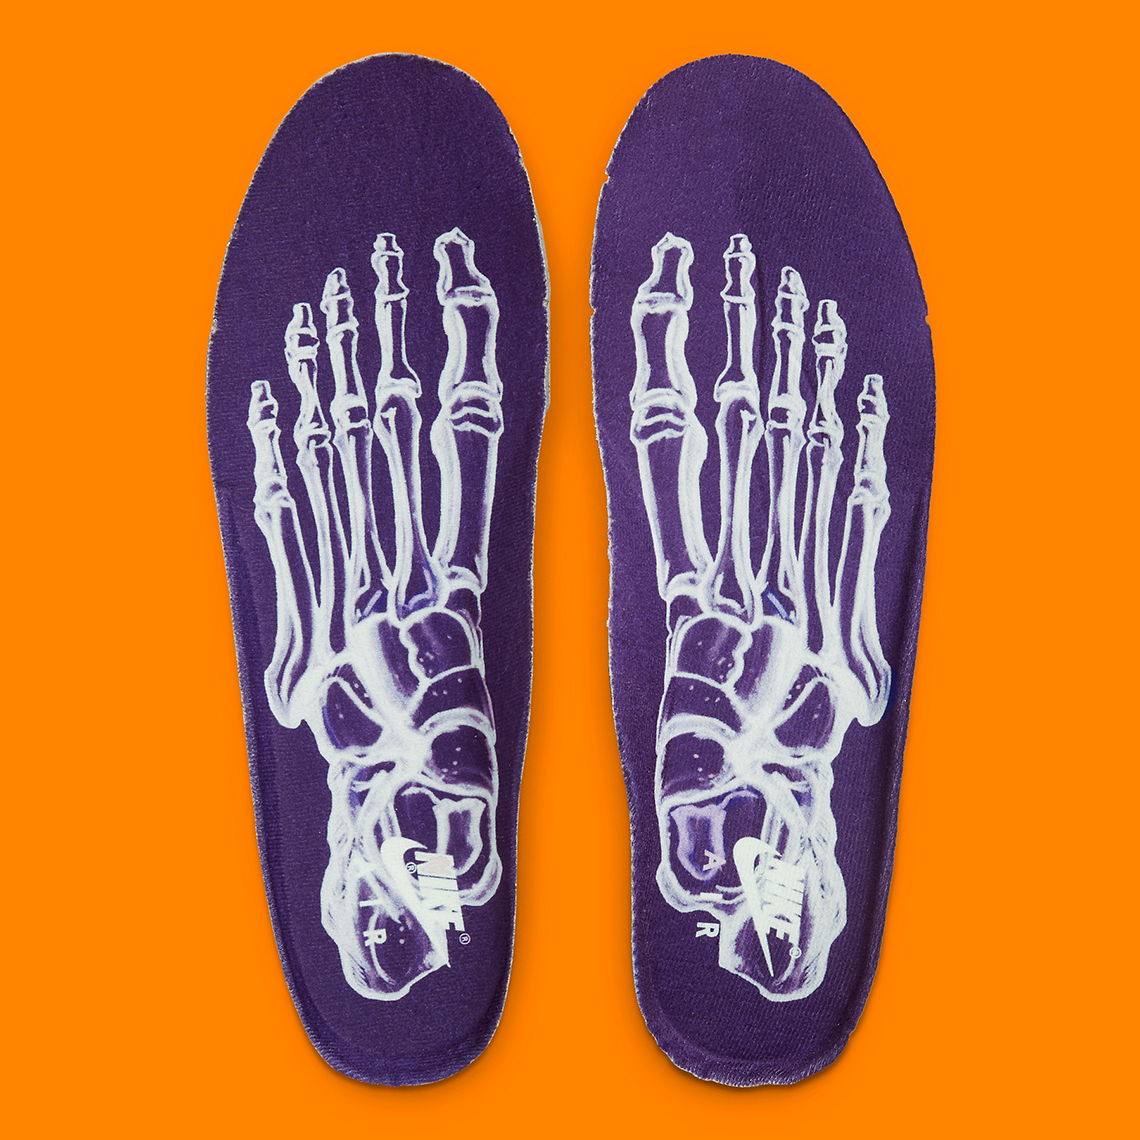 nike air force Shoes 1 low skeleton halloween court purple CU8067 500 10